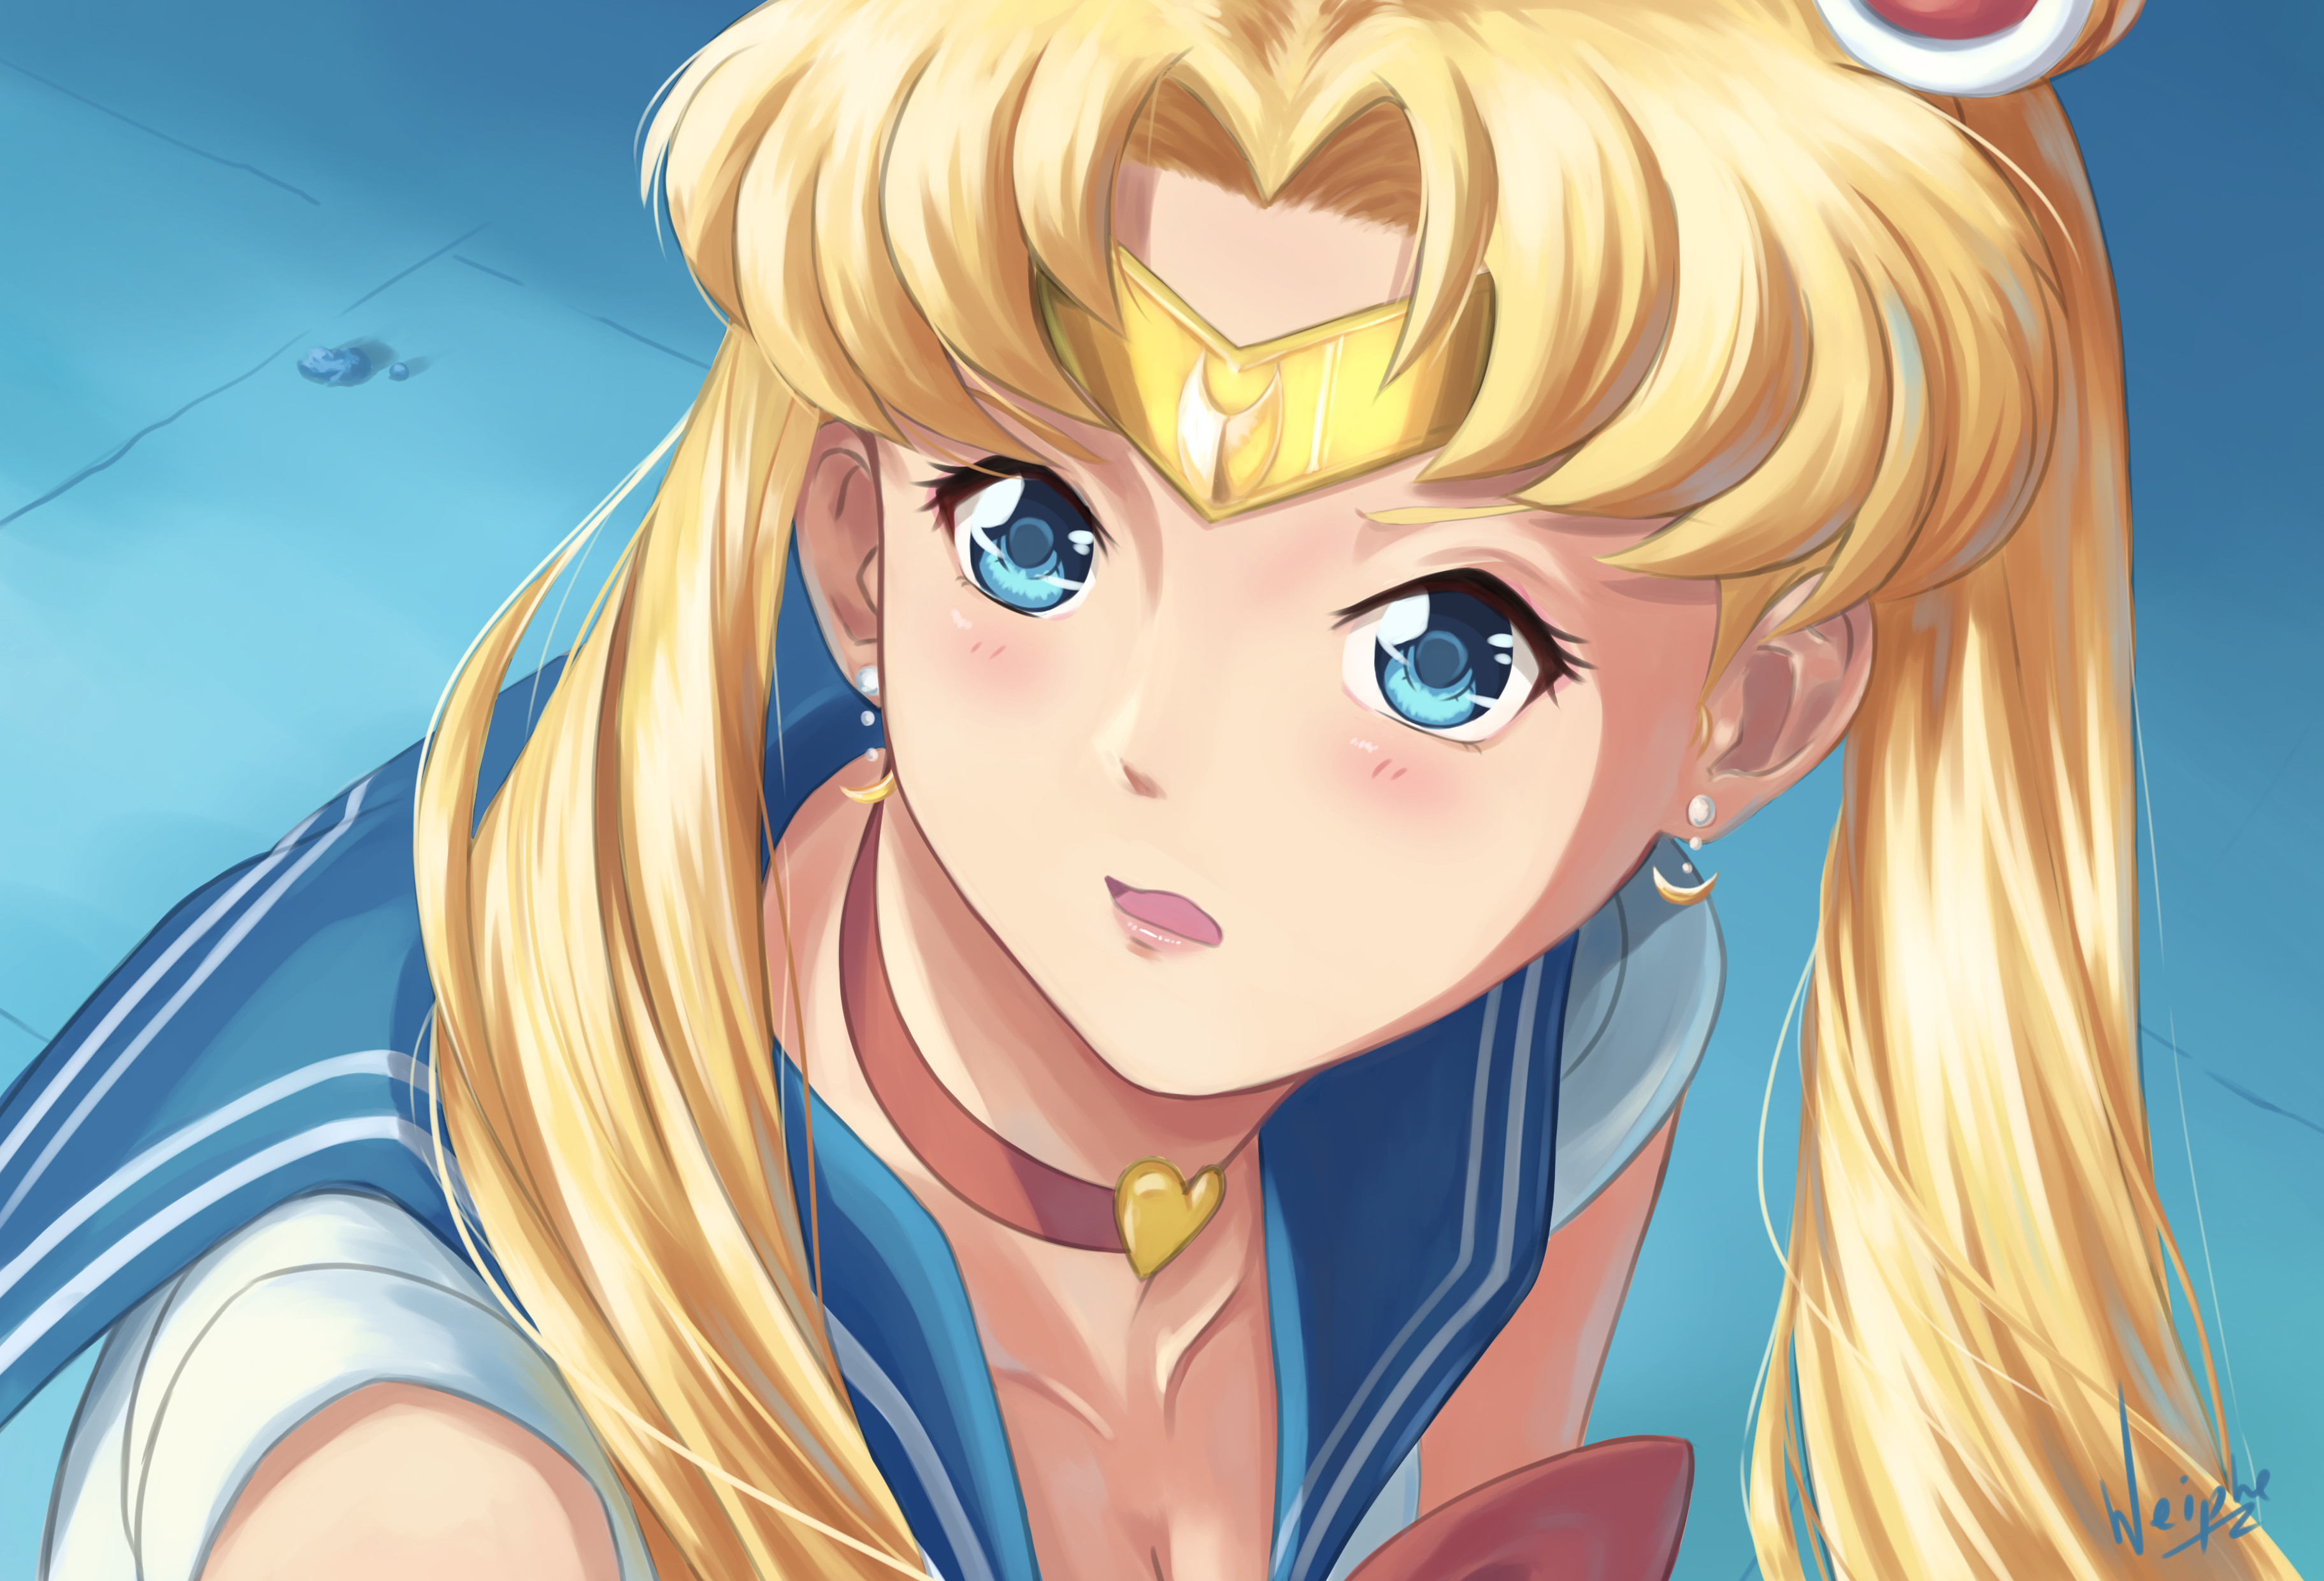 Descarga gratis la imagen Ojos Azules, Animado, Rubia, Sailor Moon Sailor Stars, Usagi Tsukino en el escritorio de tu PC